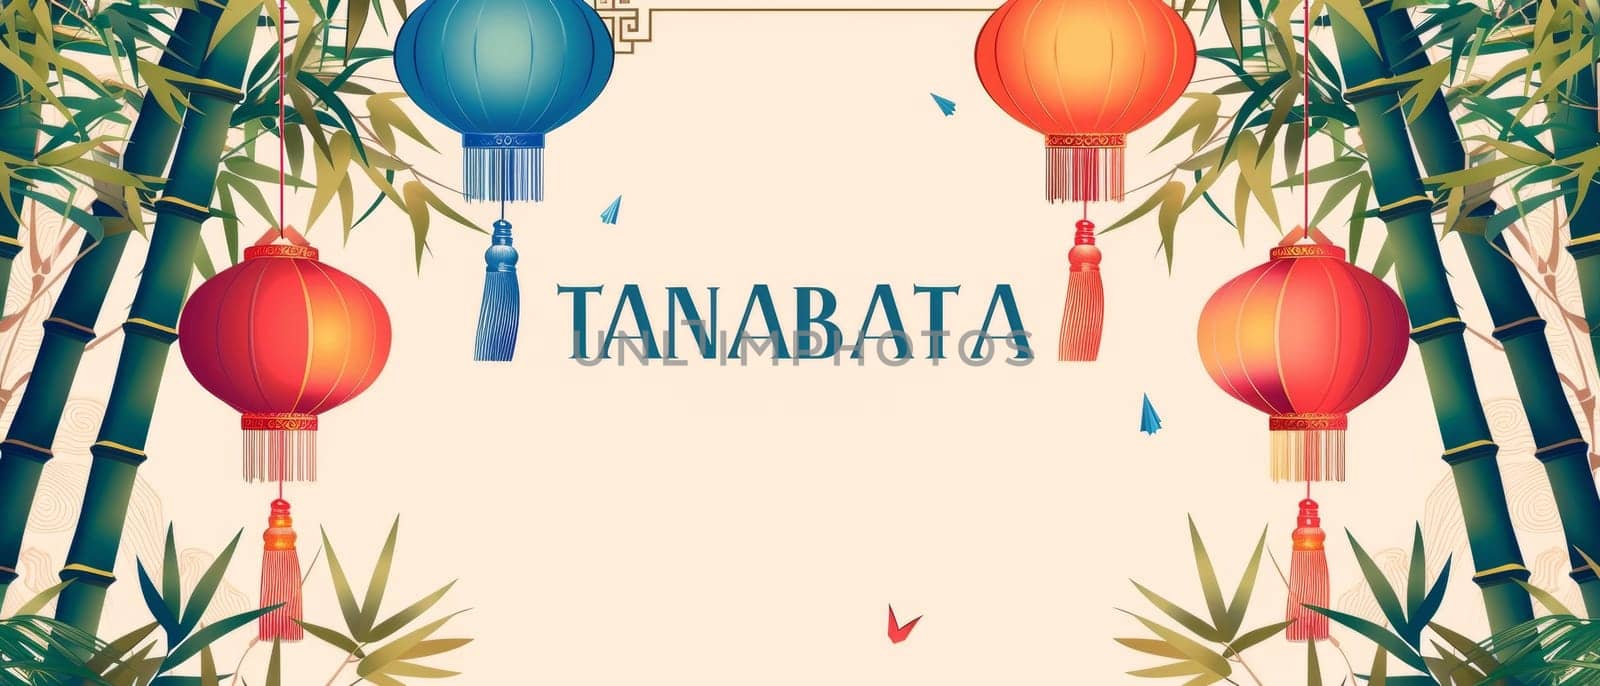 Vibrant red and blue lanterns hang amongst lush bamboo, celebrating the traditional Japanese Tanabata festival